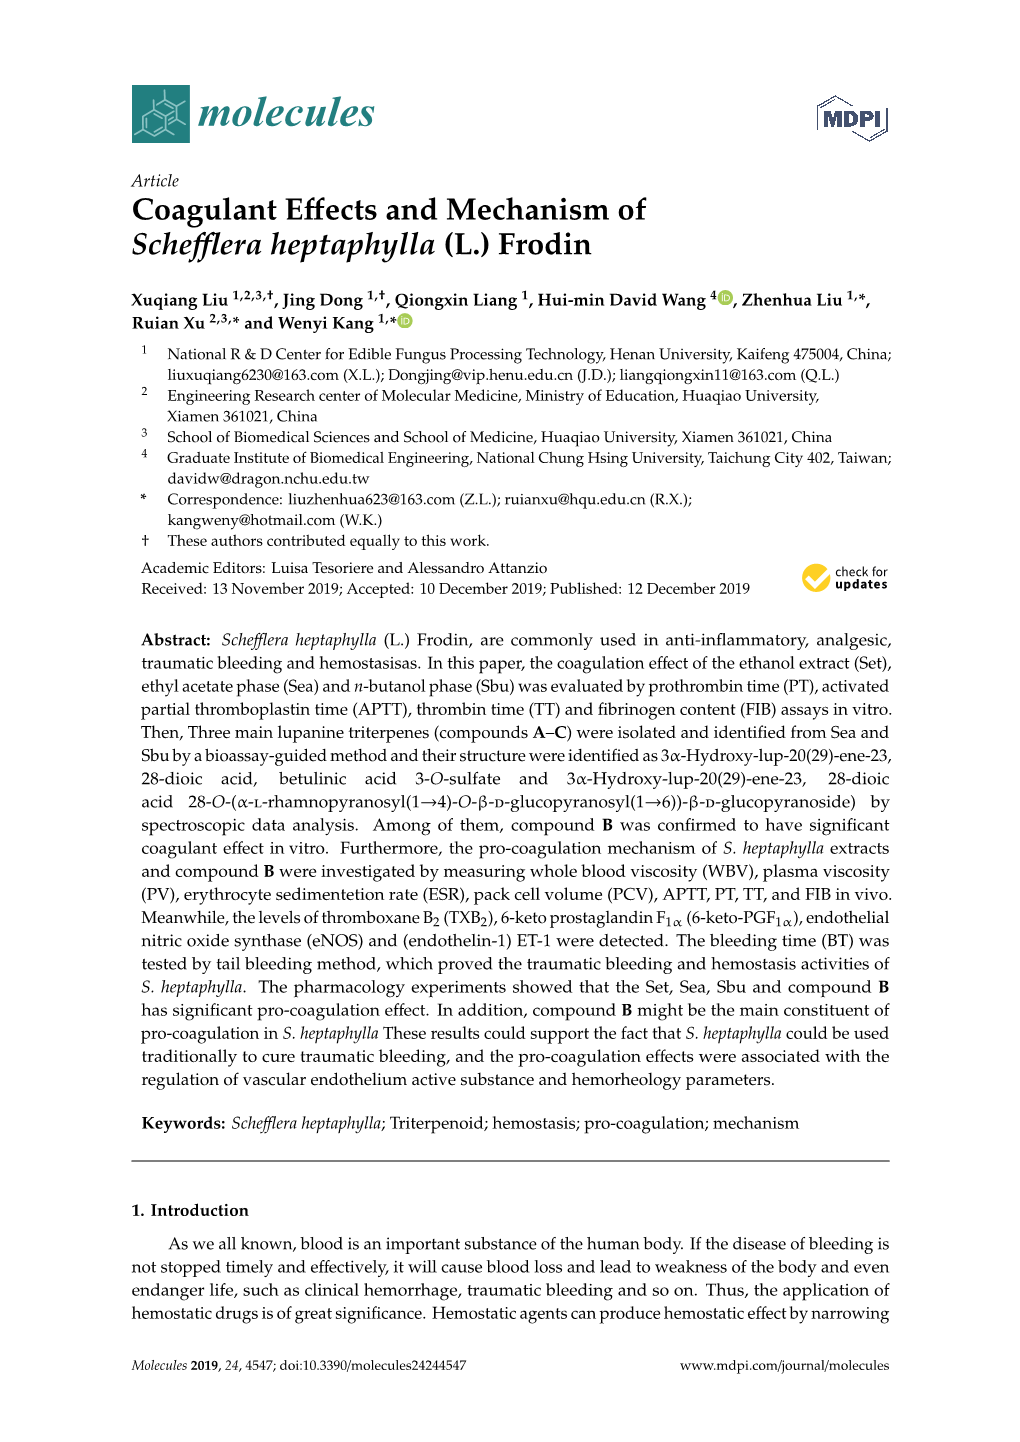 Coagulant Effects and Mechanism of Schefflera